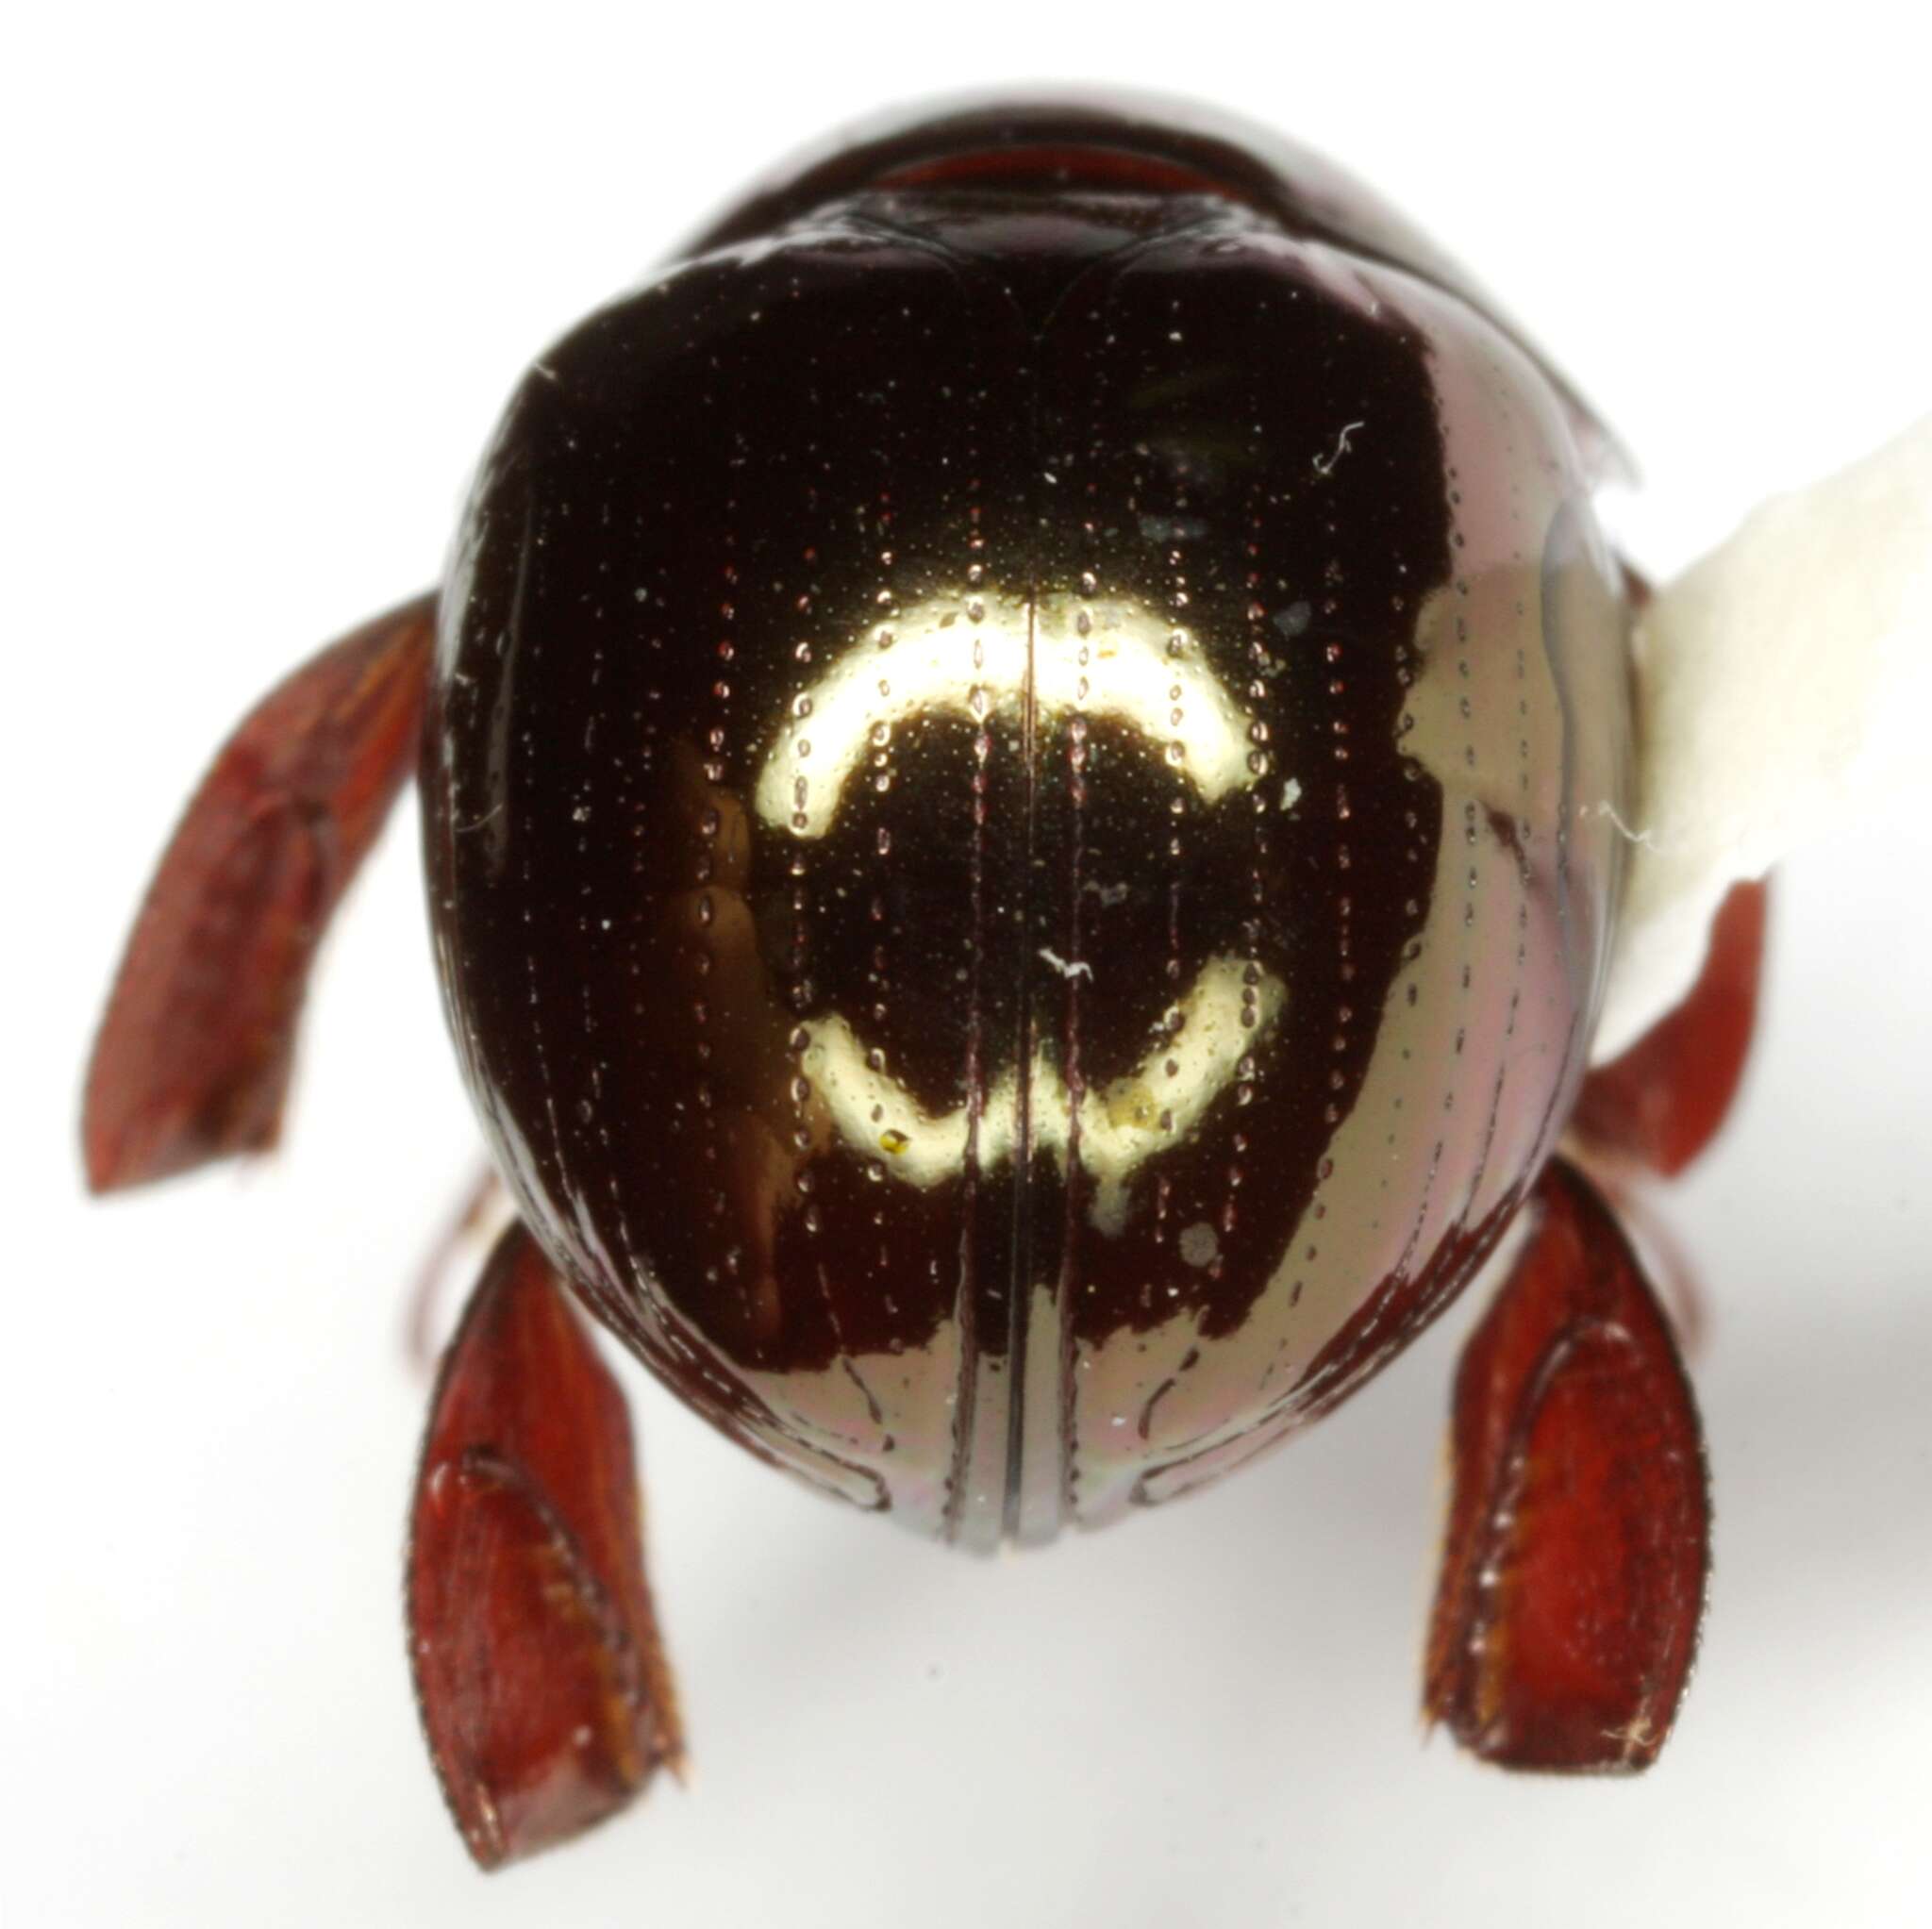 Image of Round Fungus Beetle